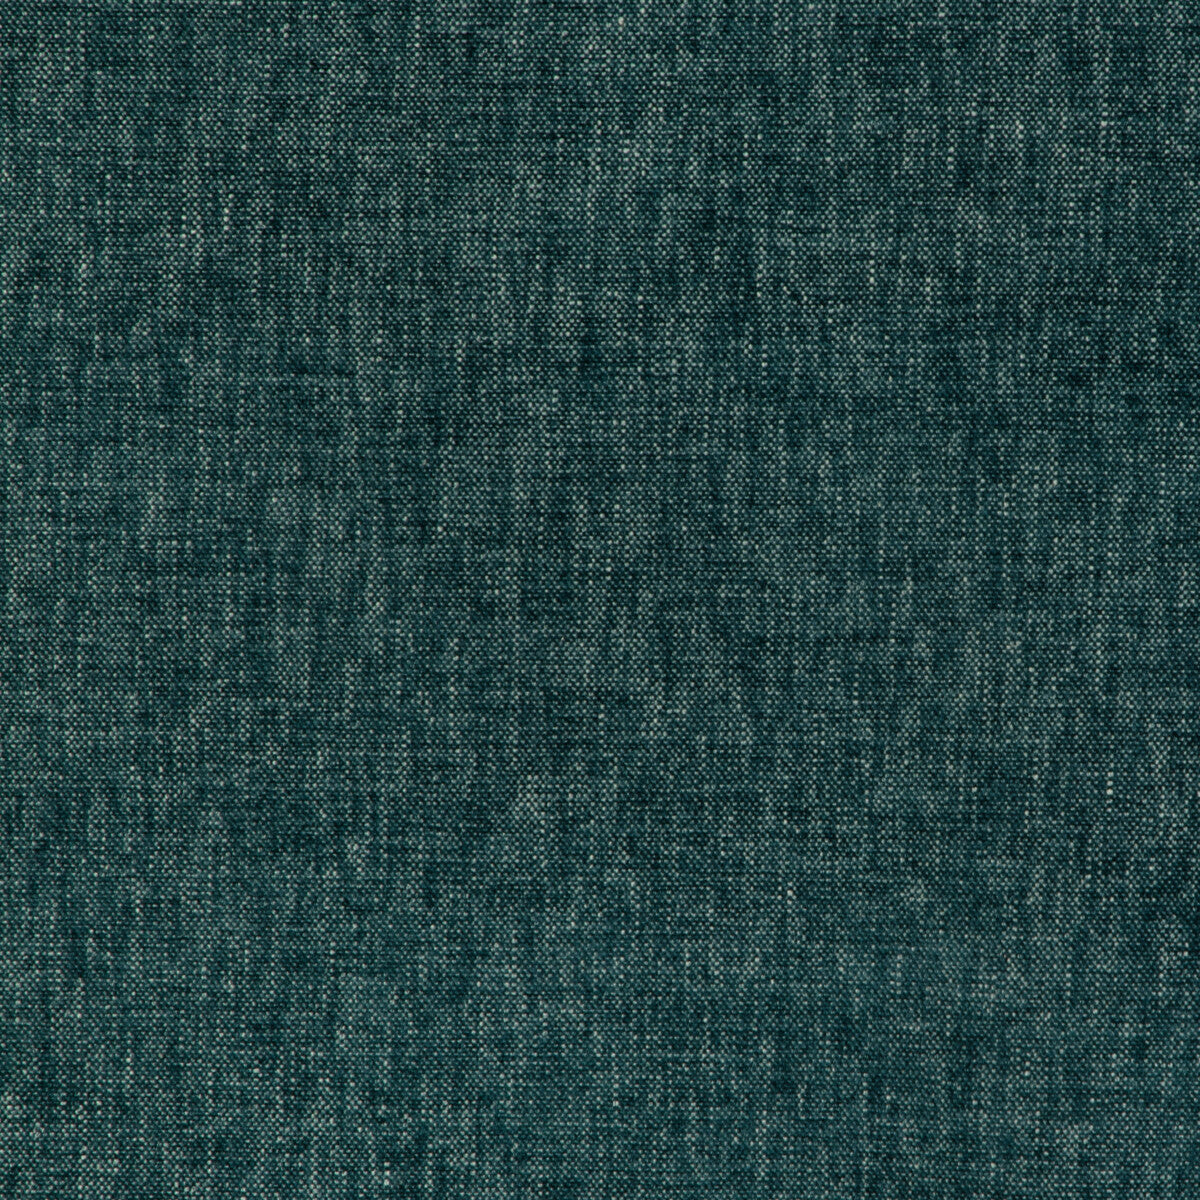 Kravet Smart fabric in 36663-313 color - pattern 36663.313.0 - by Kravet Smart in the Performance Kravetarmor collection